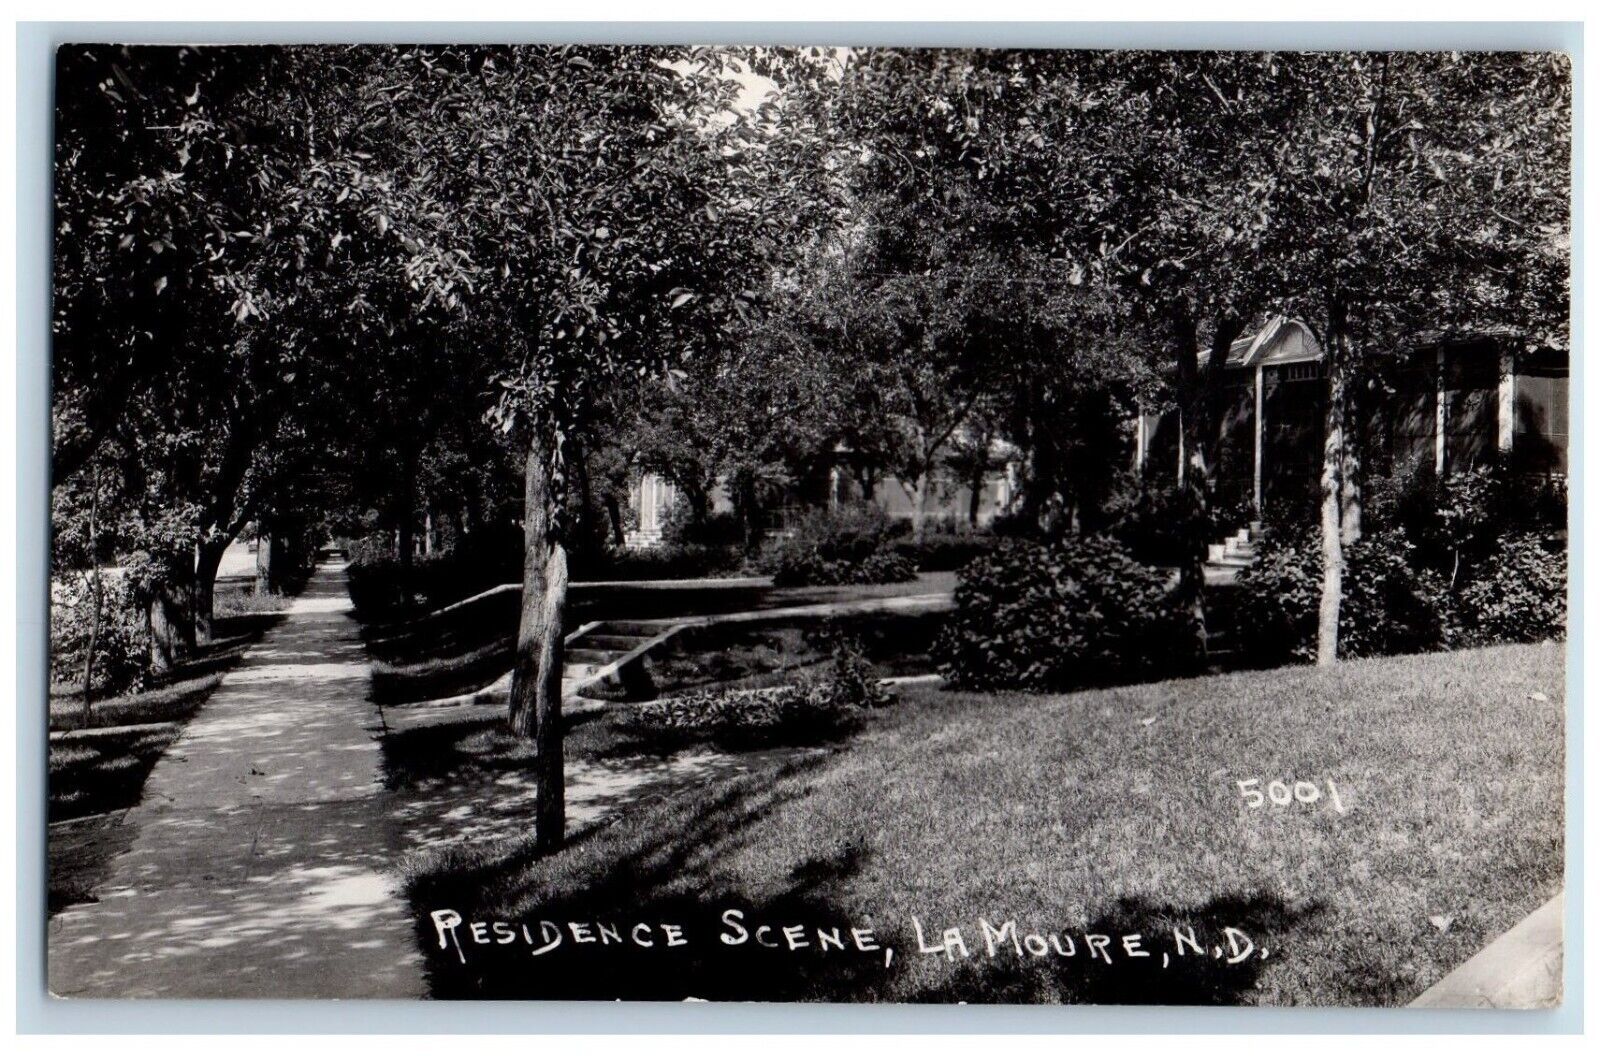 La Moure North Dakota ND Postcard RPPC Photo Residence Scene c1920's Vintage